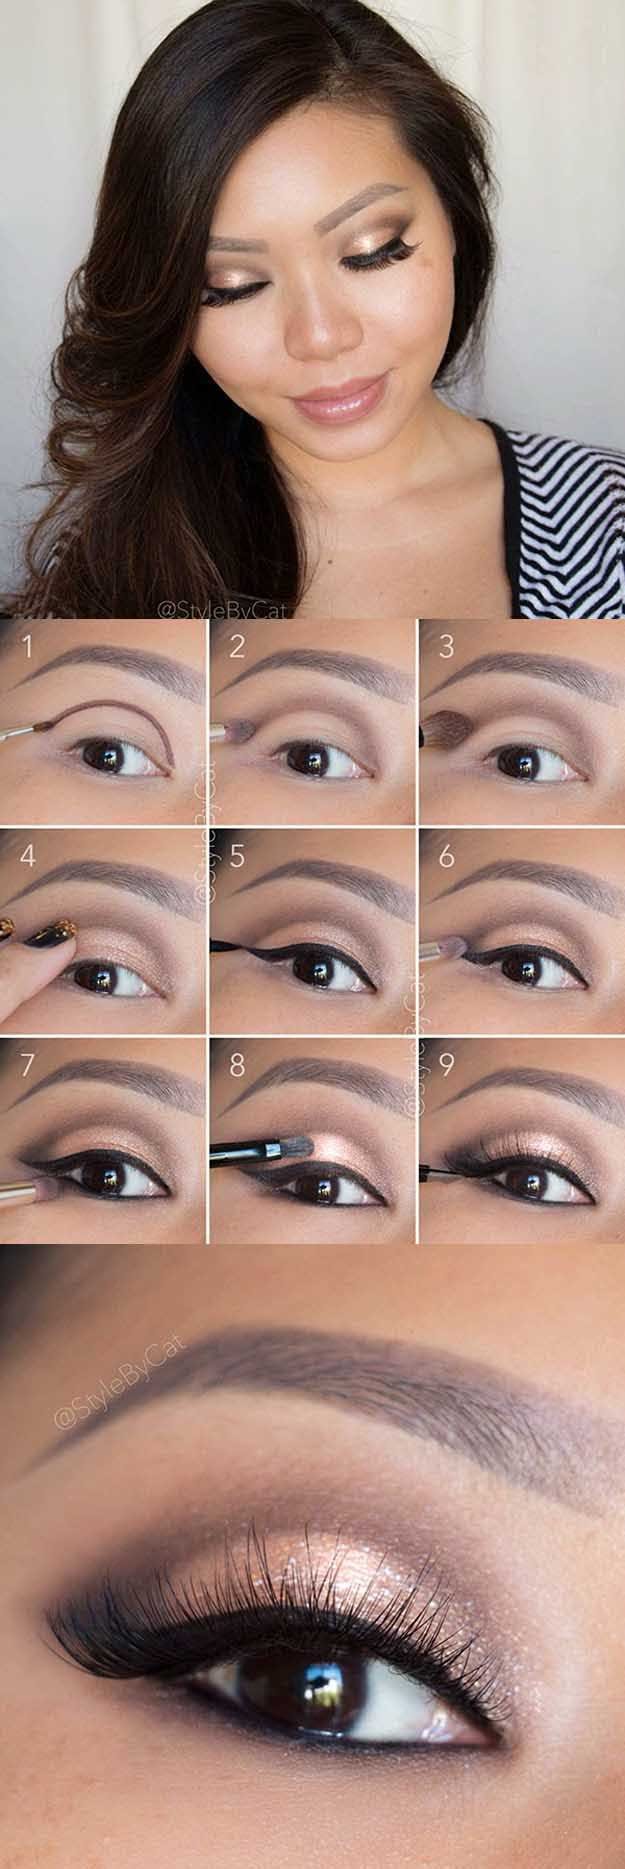 Makeup Tips For Blue Eyes And Fair Skin 35 Best Makeup Tips For Asian Women The Goddess